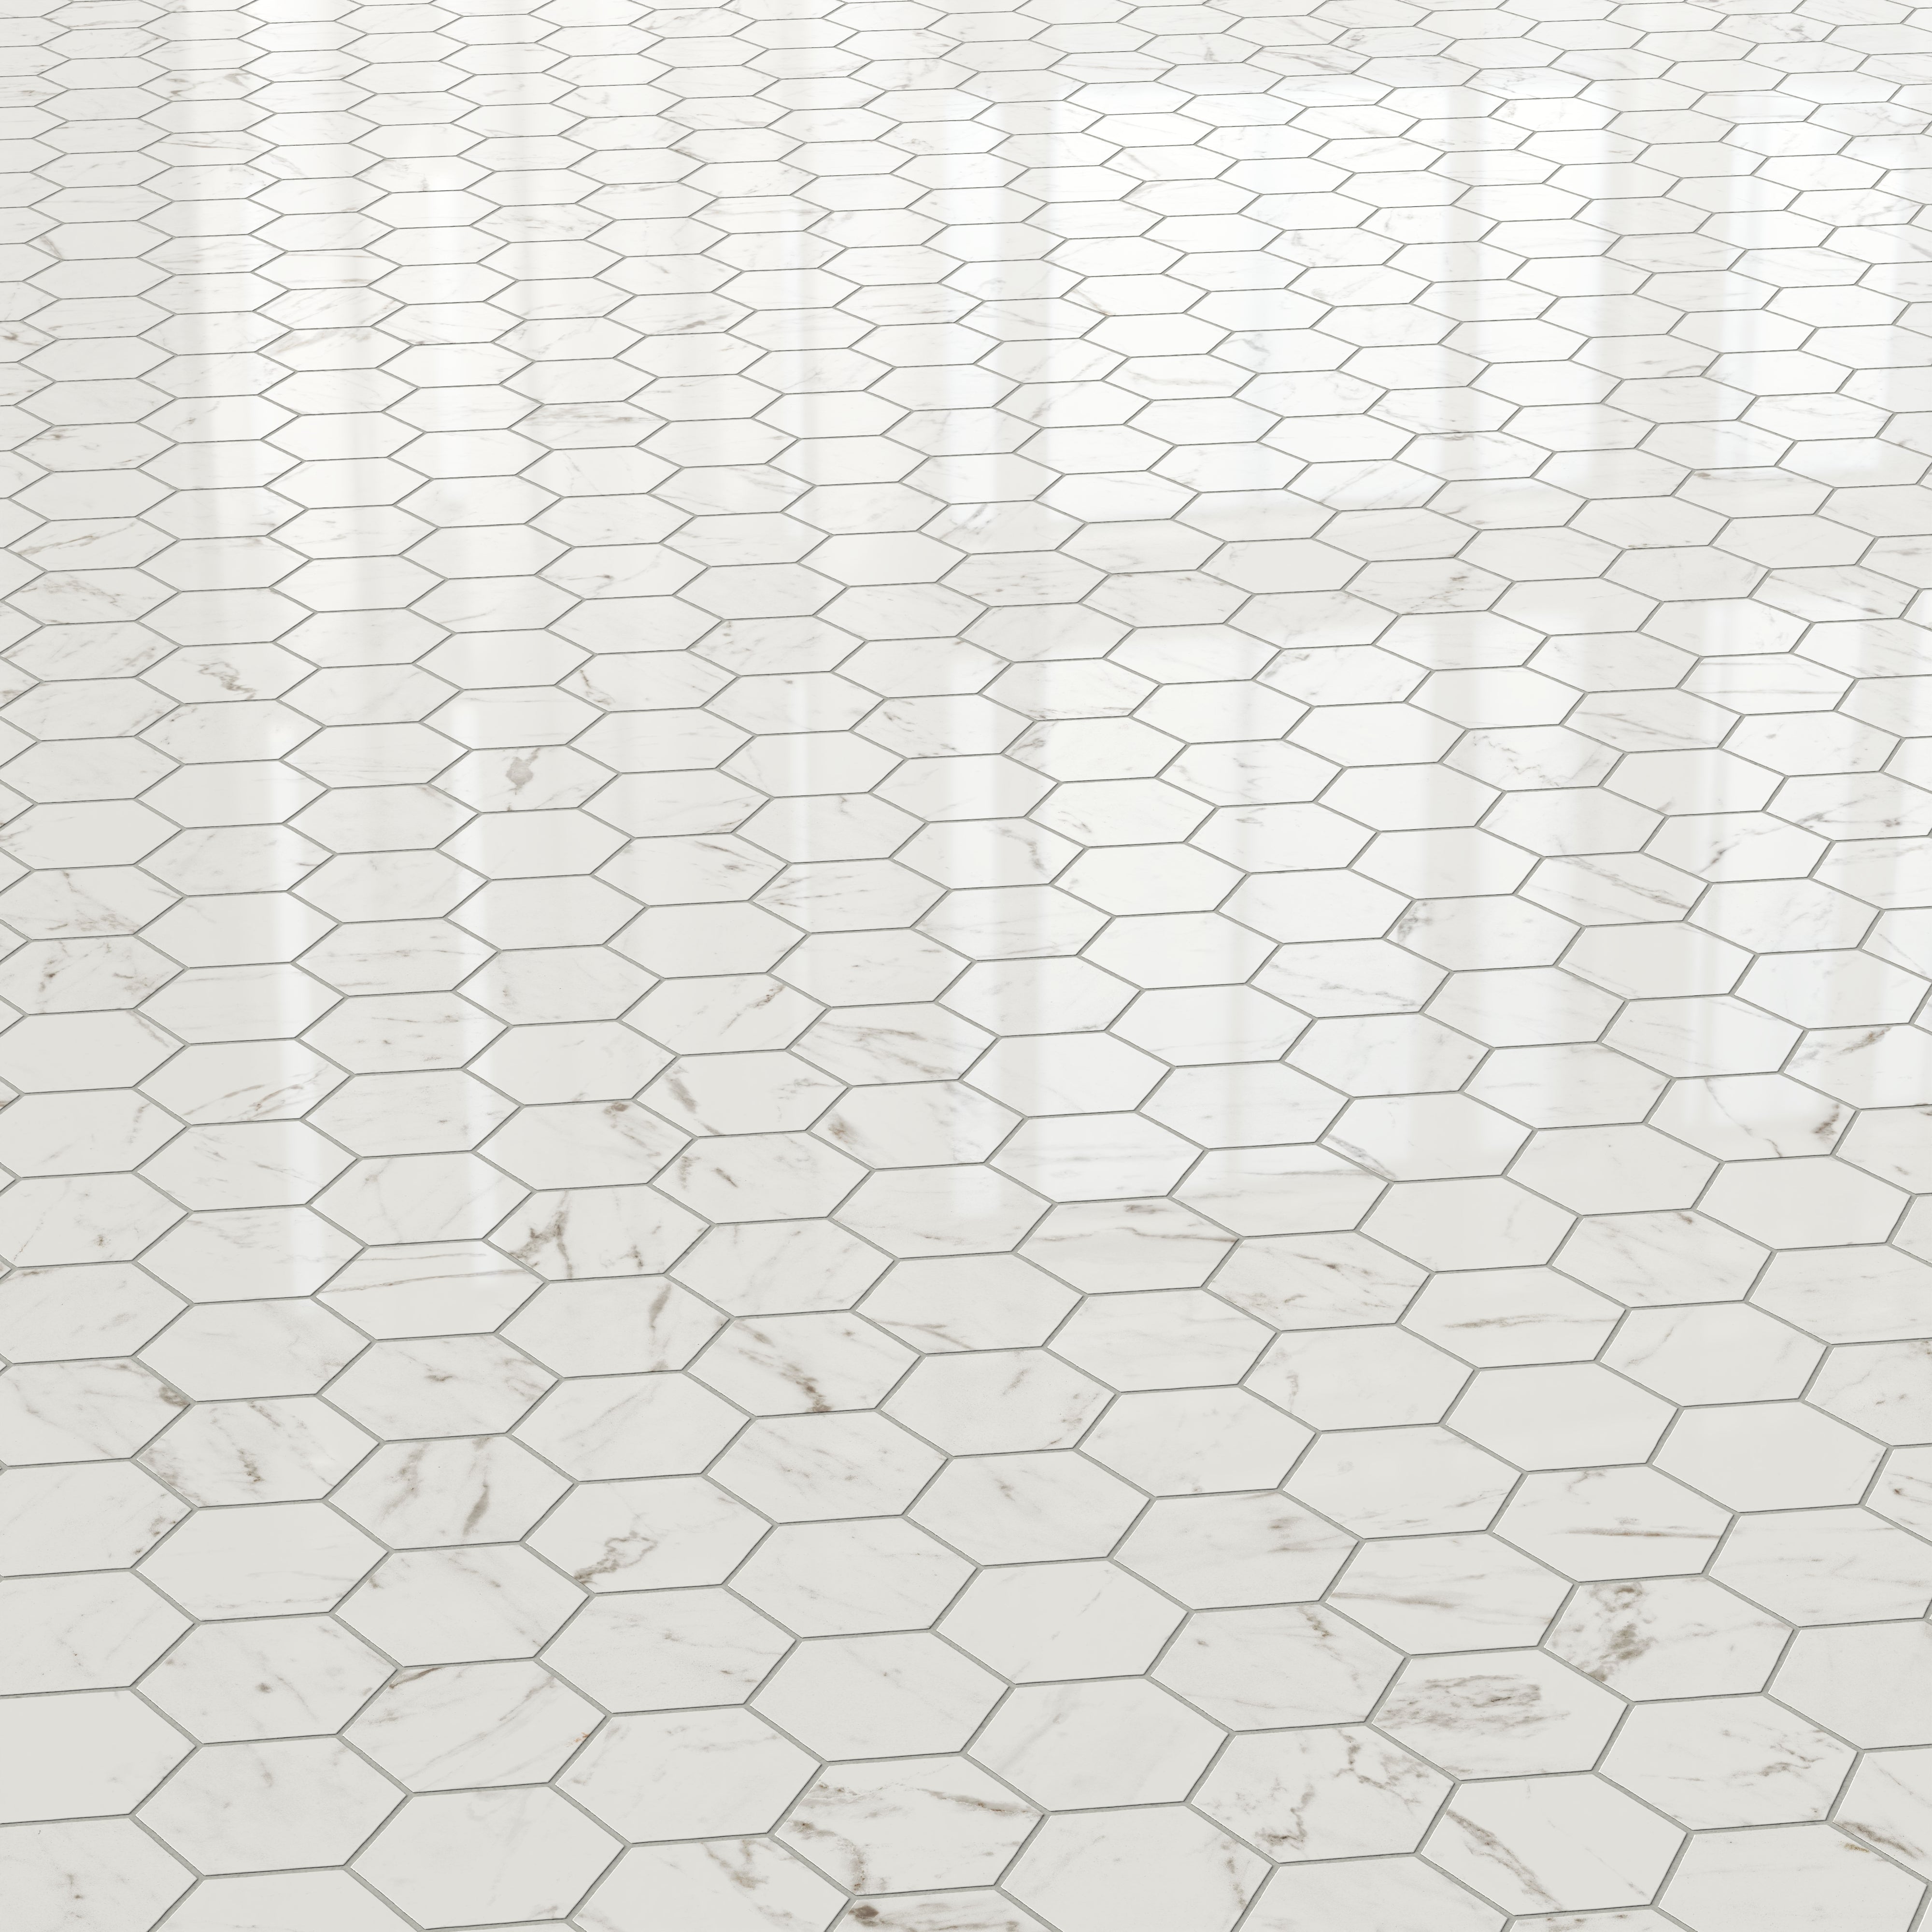 Blair 3x3 Polished Porcelain Hexagon Mosaic Tile in White Carrara